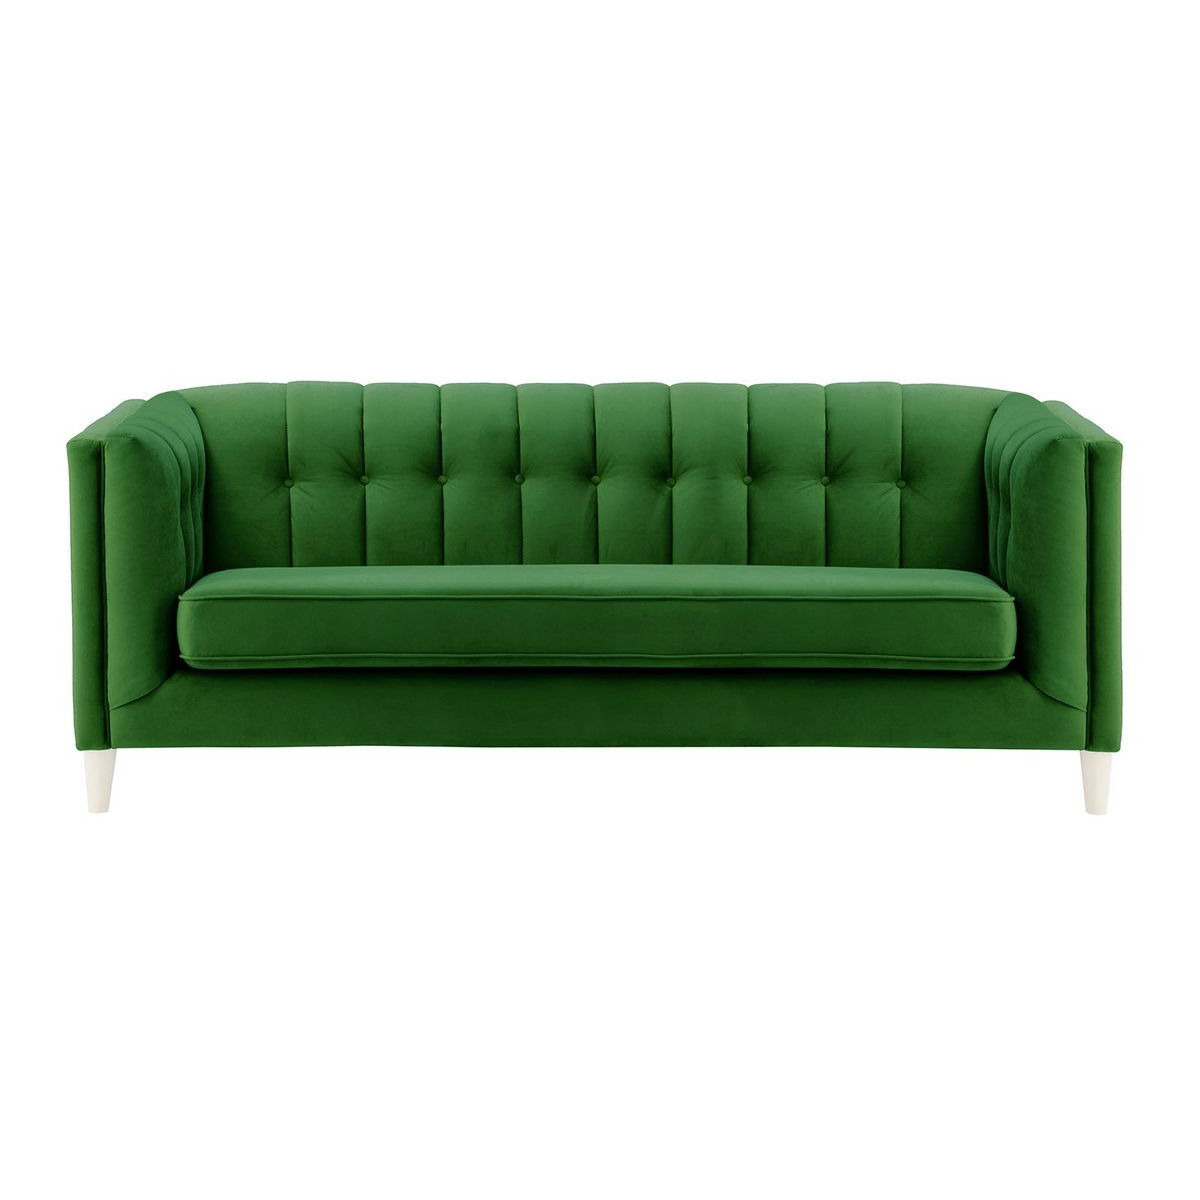 Sodre 3 Seater Sofa, dark green, Leg colour: white - image 1